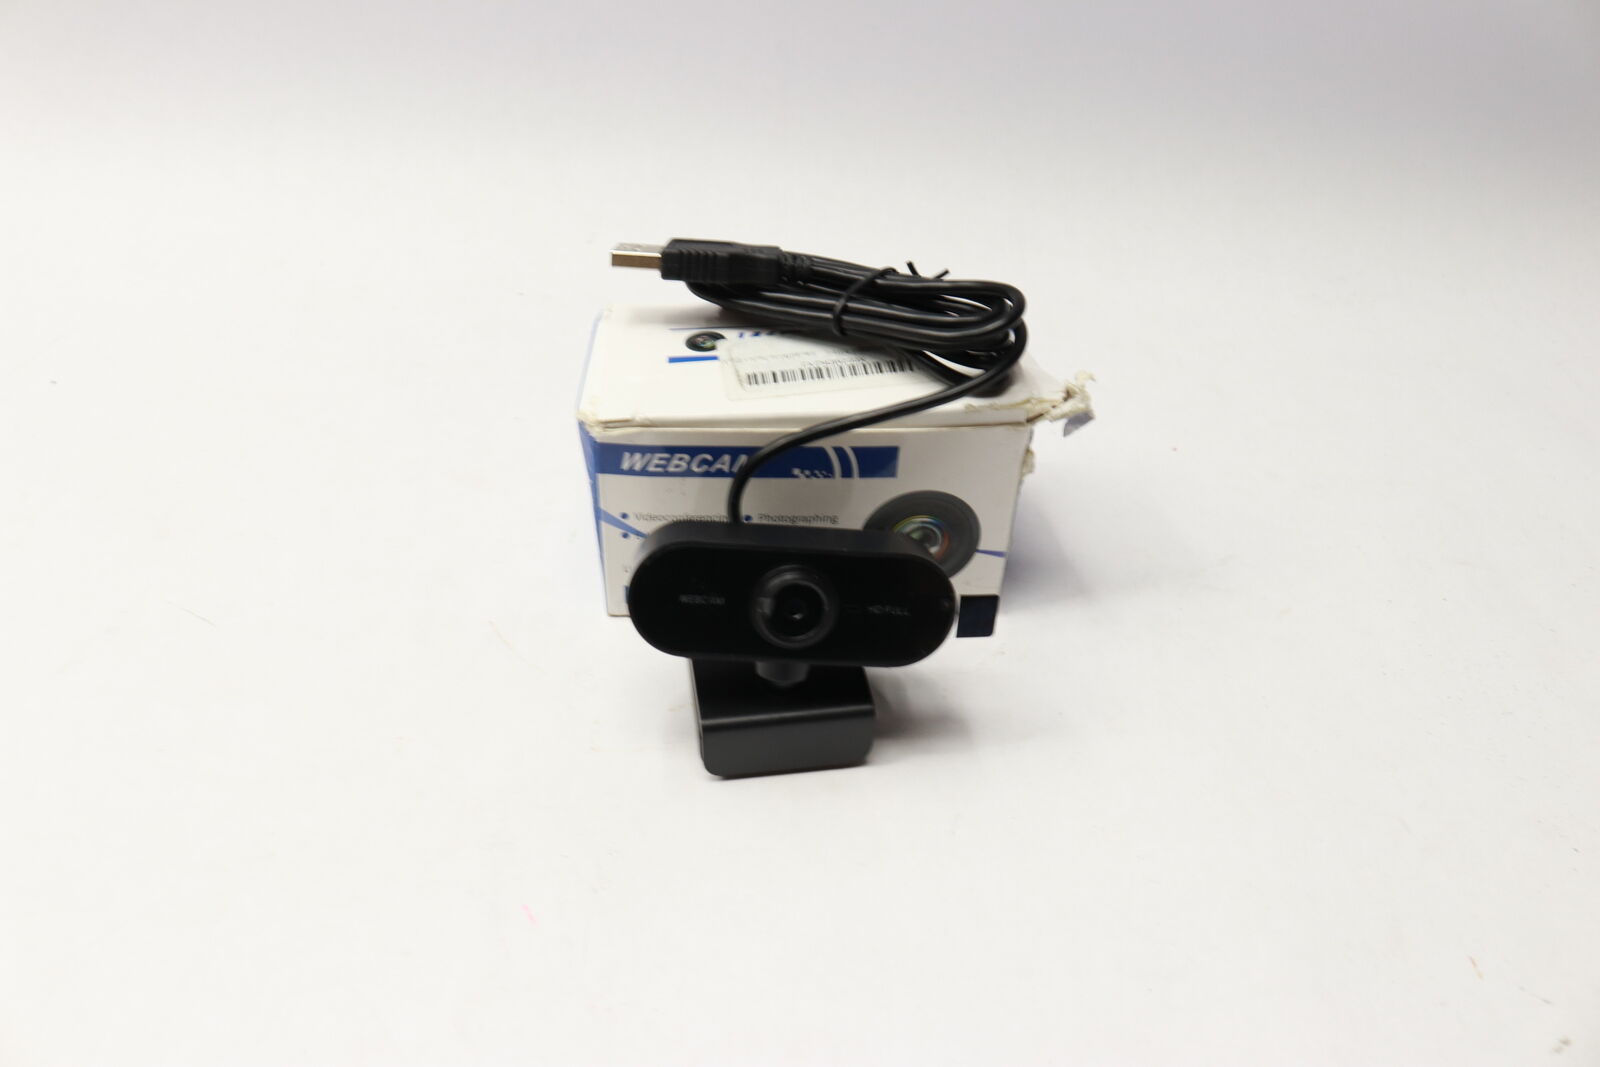 360 Degree Rotation USB 2.0 Plug & Play Webcam w/ Microphone & Privacy Cover HW1